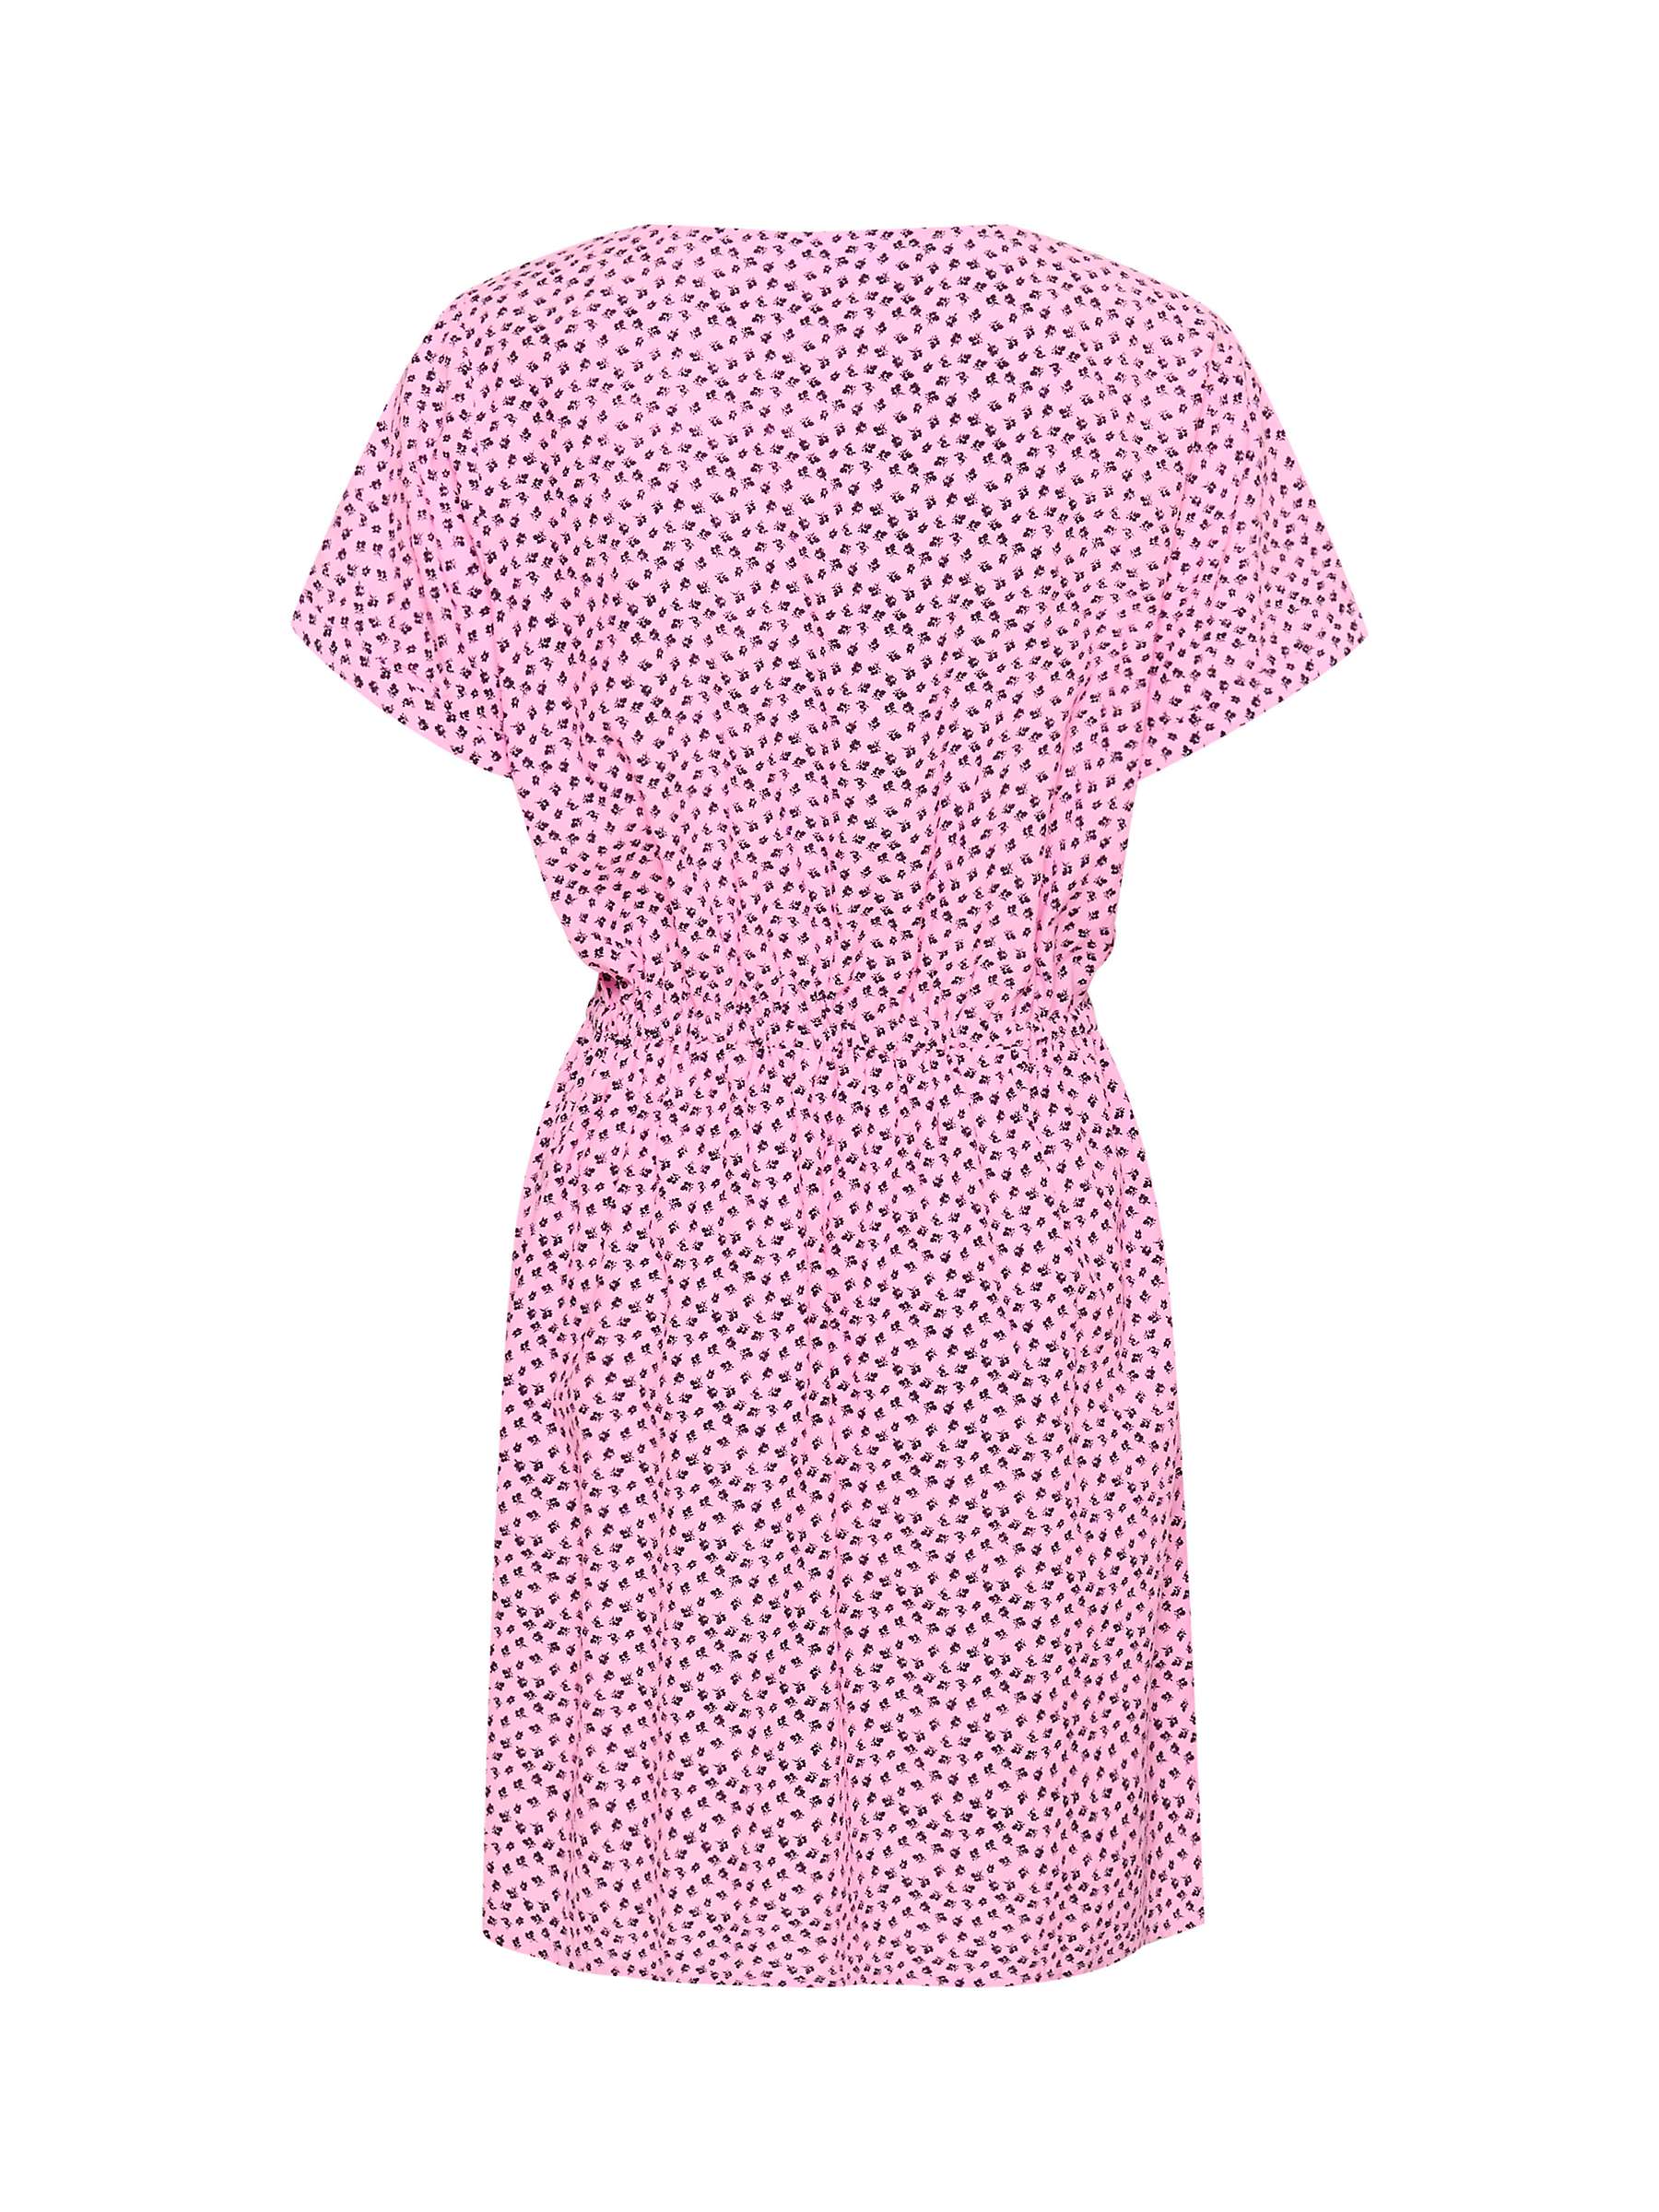 Buy Saint Tropez Zanni Short Sleeve Round Neck Dress, Pink Ditsy Floral Online at johnlewis.com